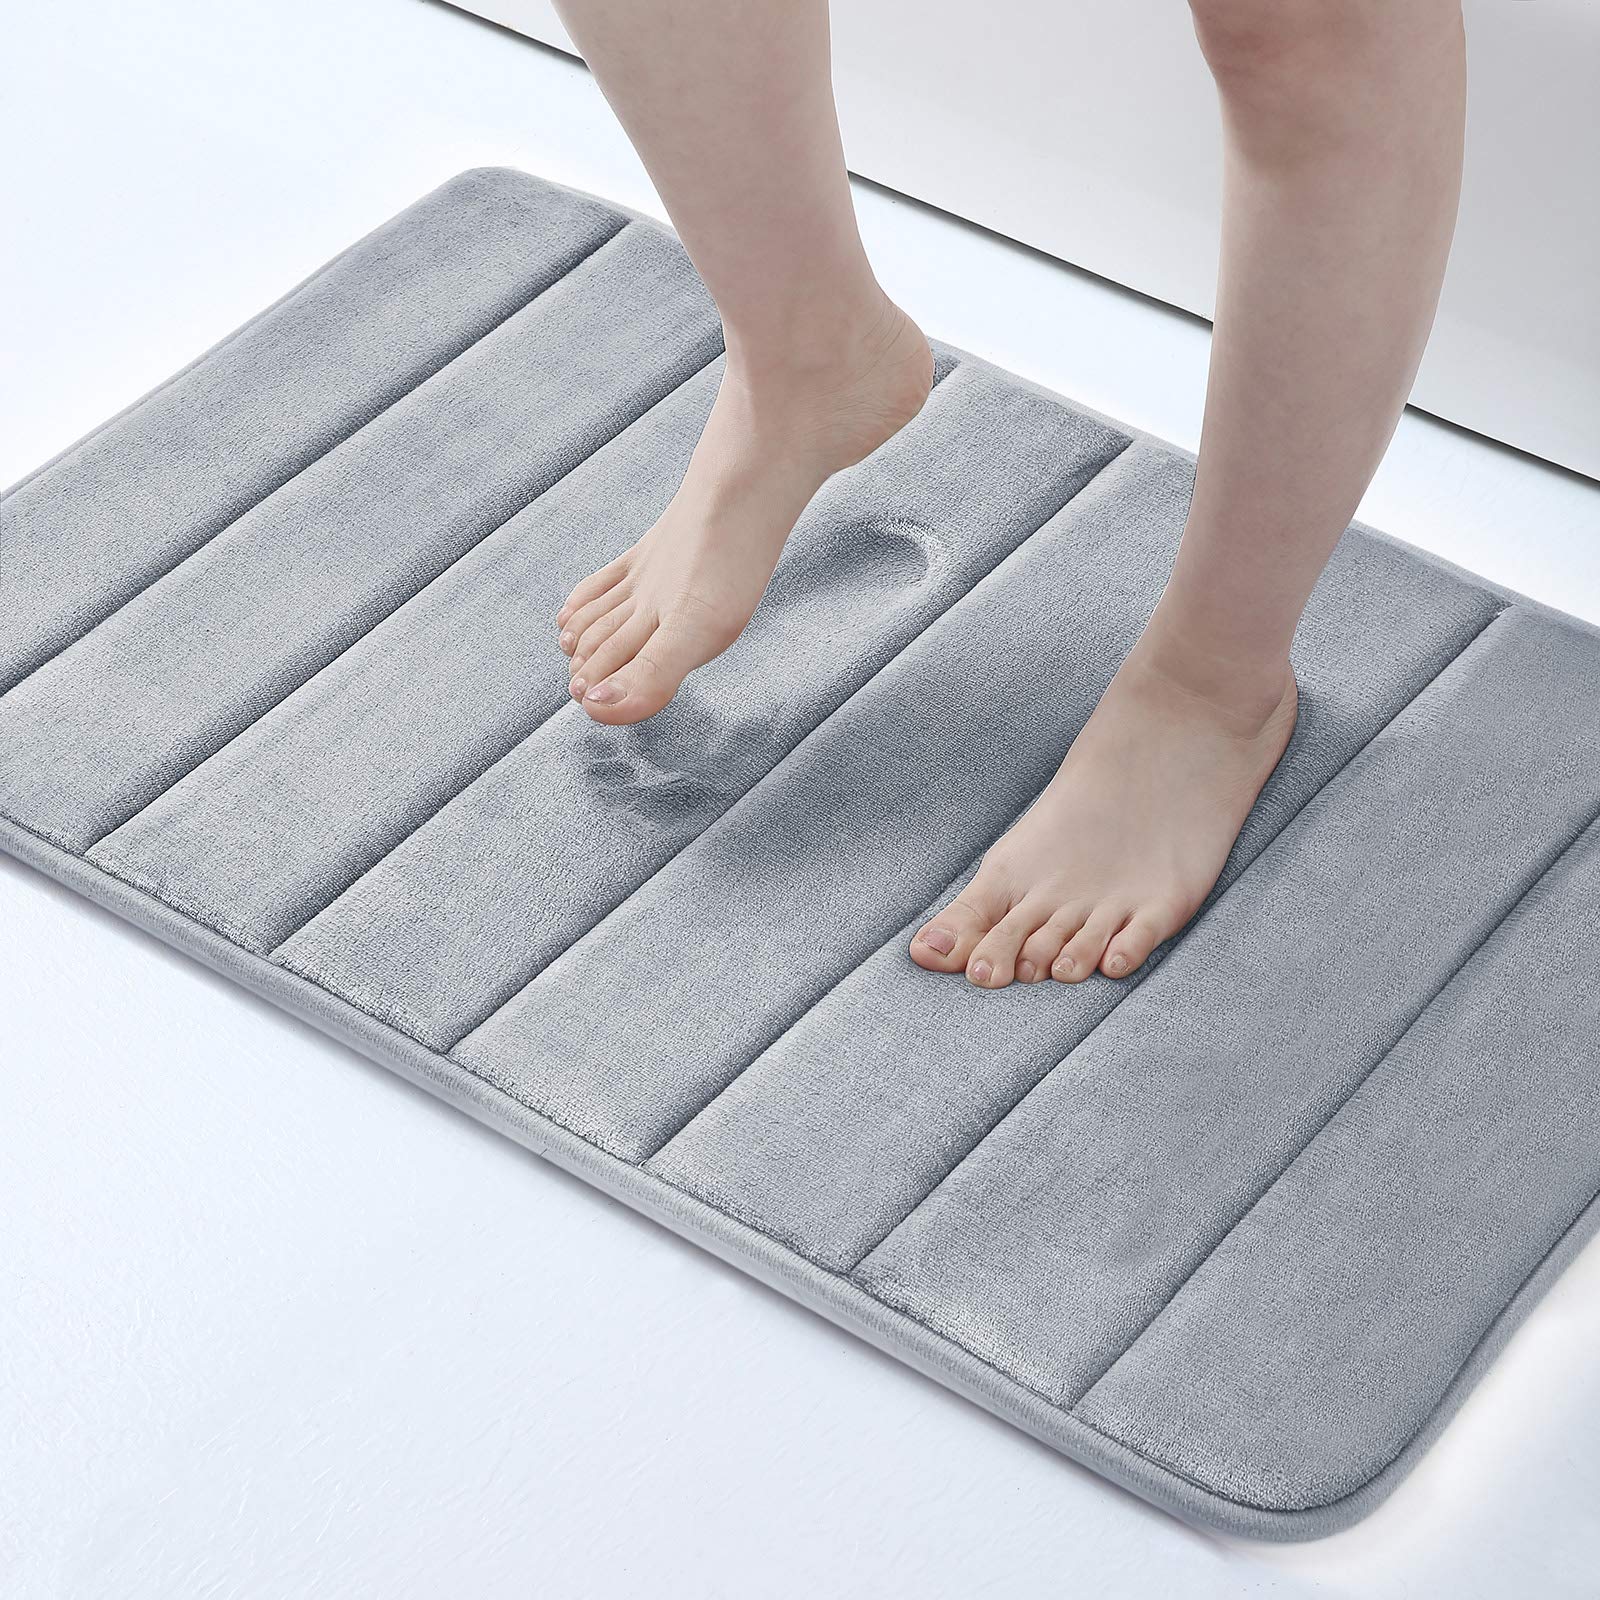 Memory Foam Bath Mat Anti-Slip Shower Carpet Soft Foot Pad Decoration Floor Protector Absorbent Quick Dry Bathroom Rug Mats & Rugs DailyAlertDeals 43x61cm(17x24inch) China gray 3